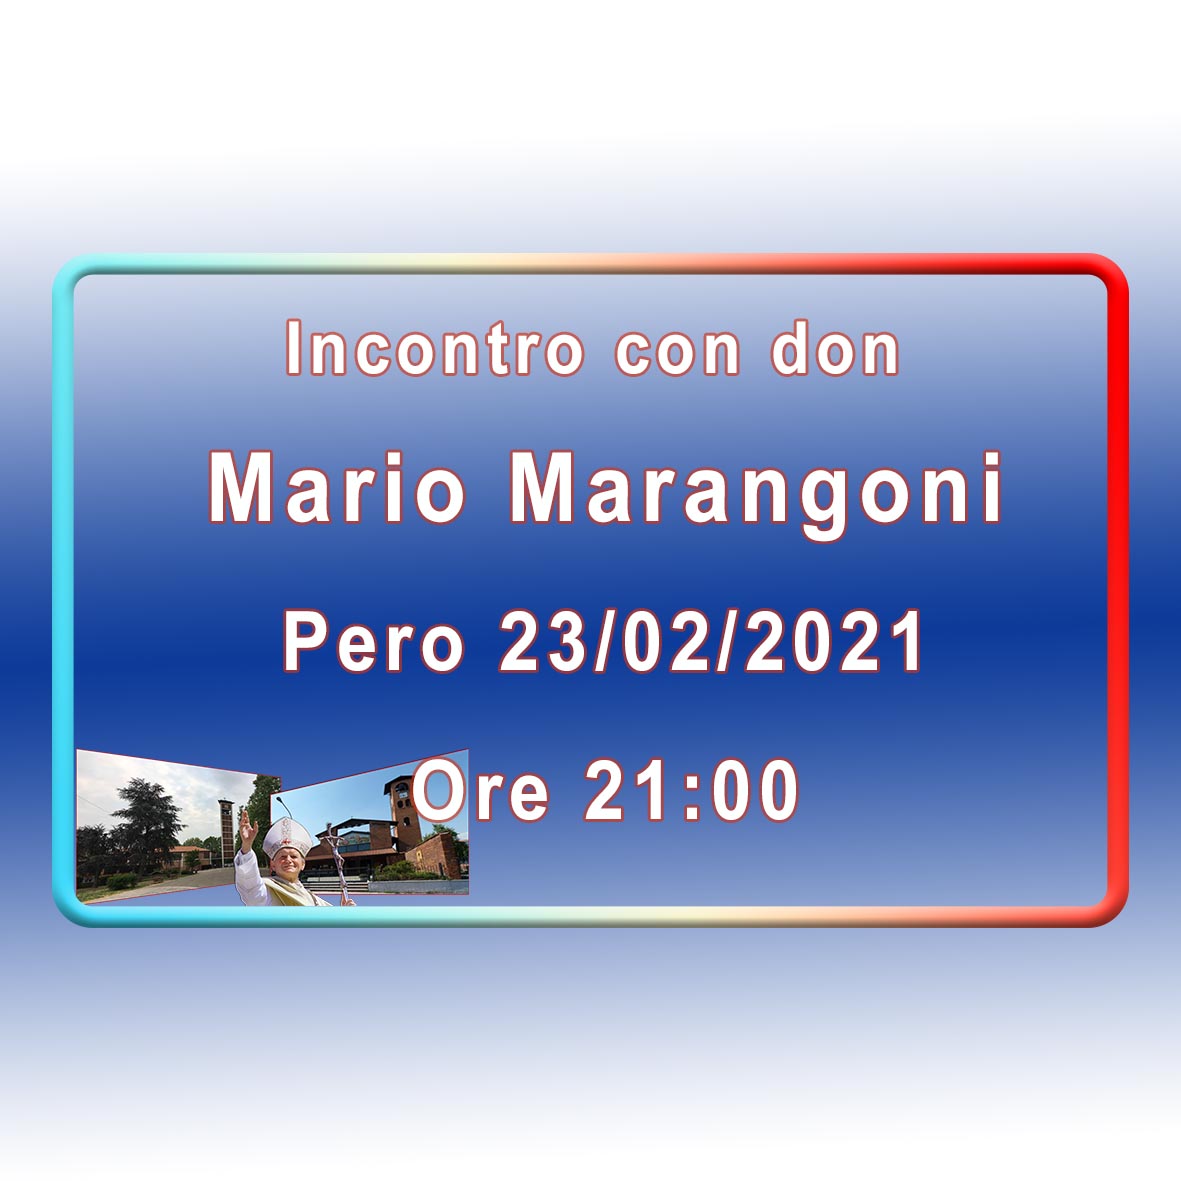 Incontro con don Mario Marangoni